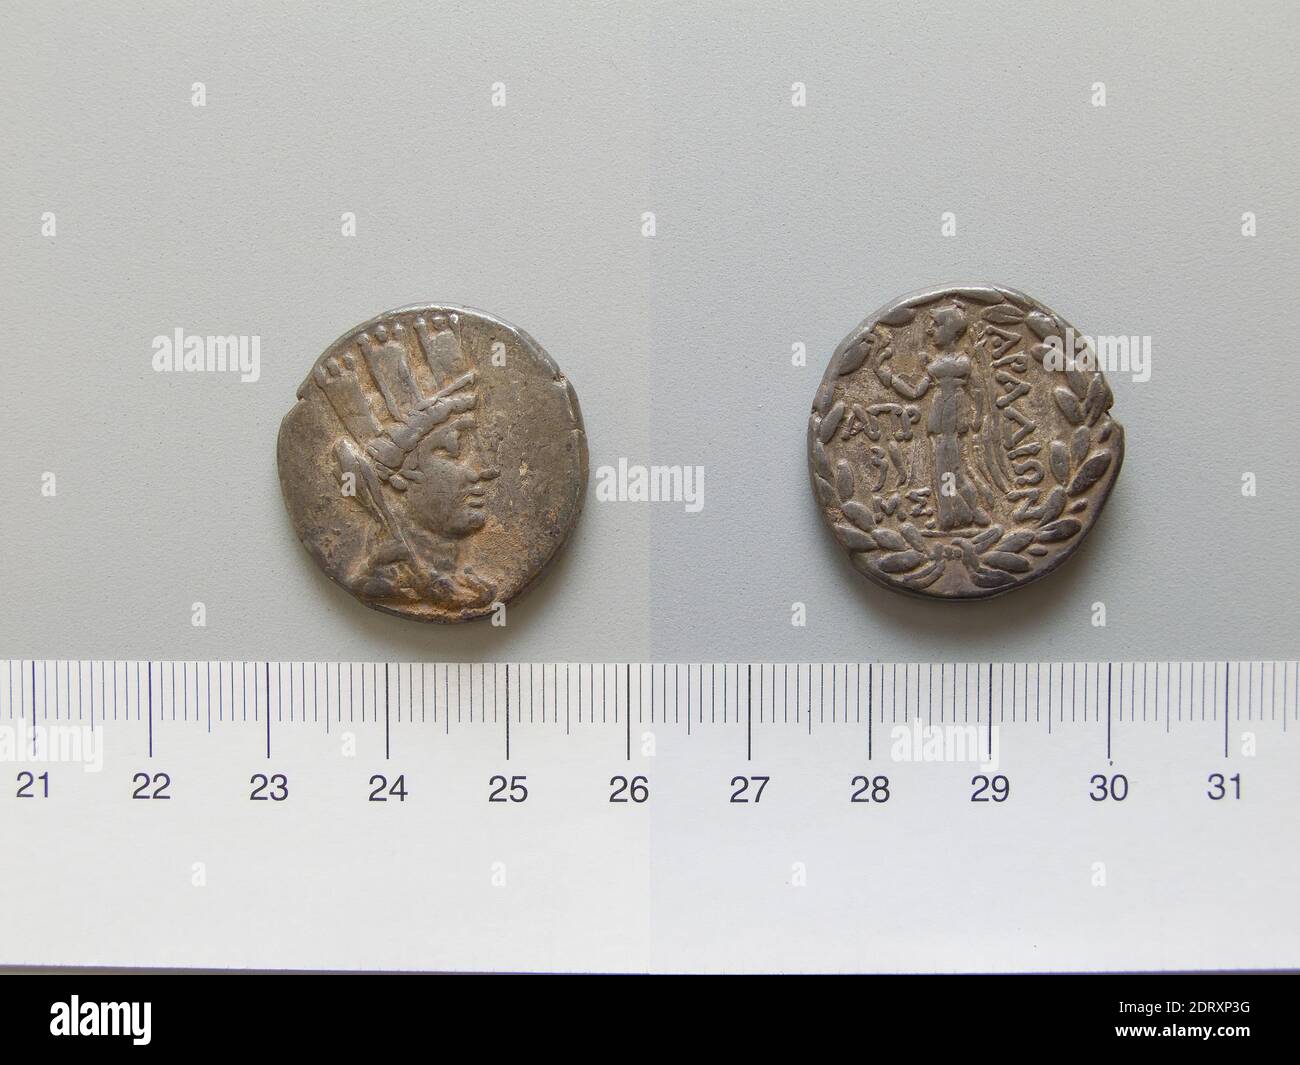 Mint: Aradus, Tetradrachm from Aradus, 79–78 B.C., Silver, 14.75 g, 11:00, 26.4 mm, Made in Aradus, Phoenicia, Greek, 1st century B.C., Numismatics Stock Photo